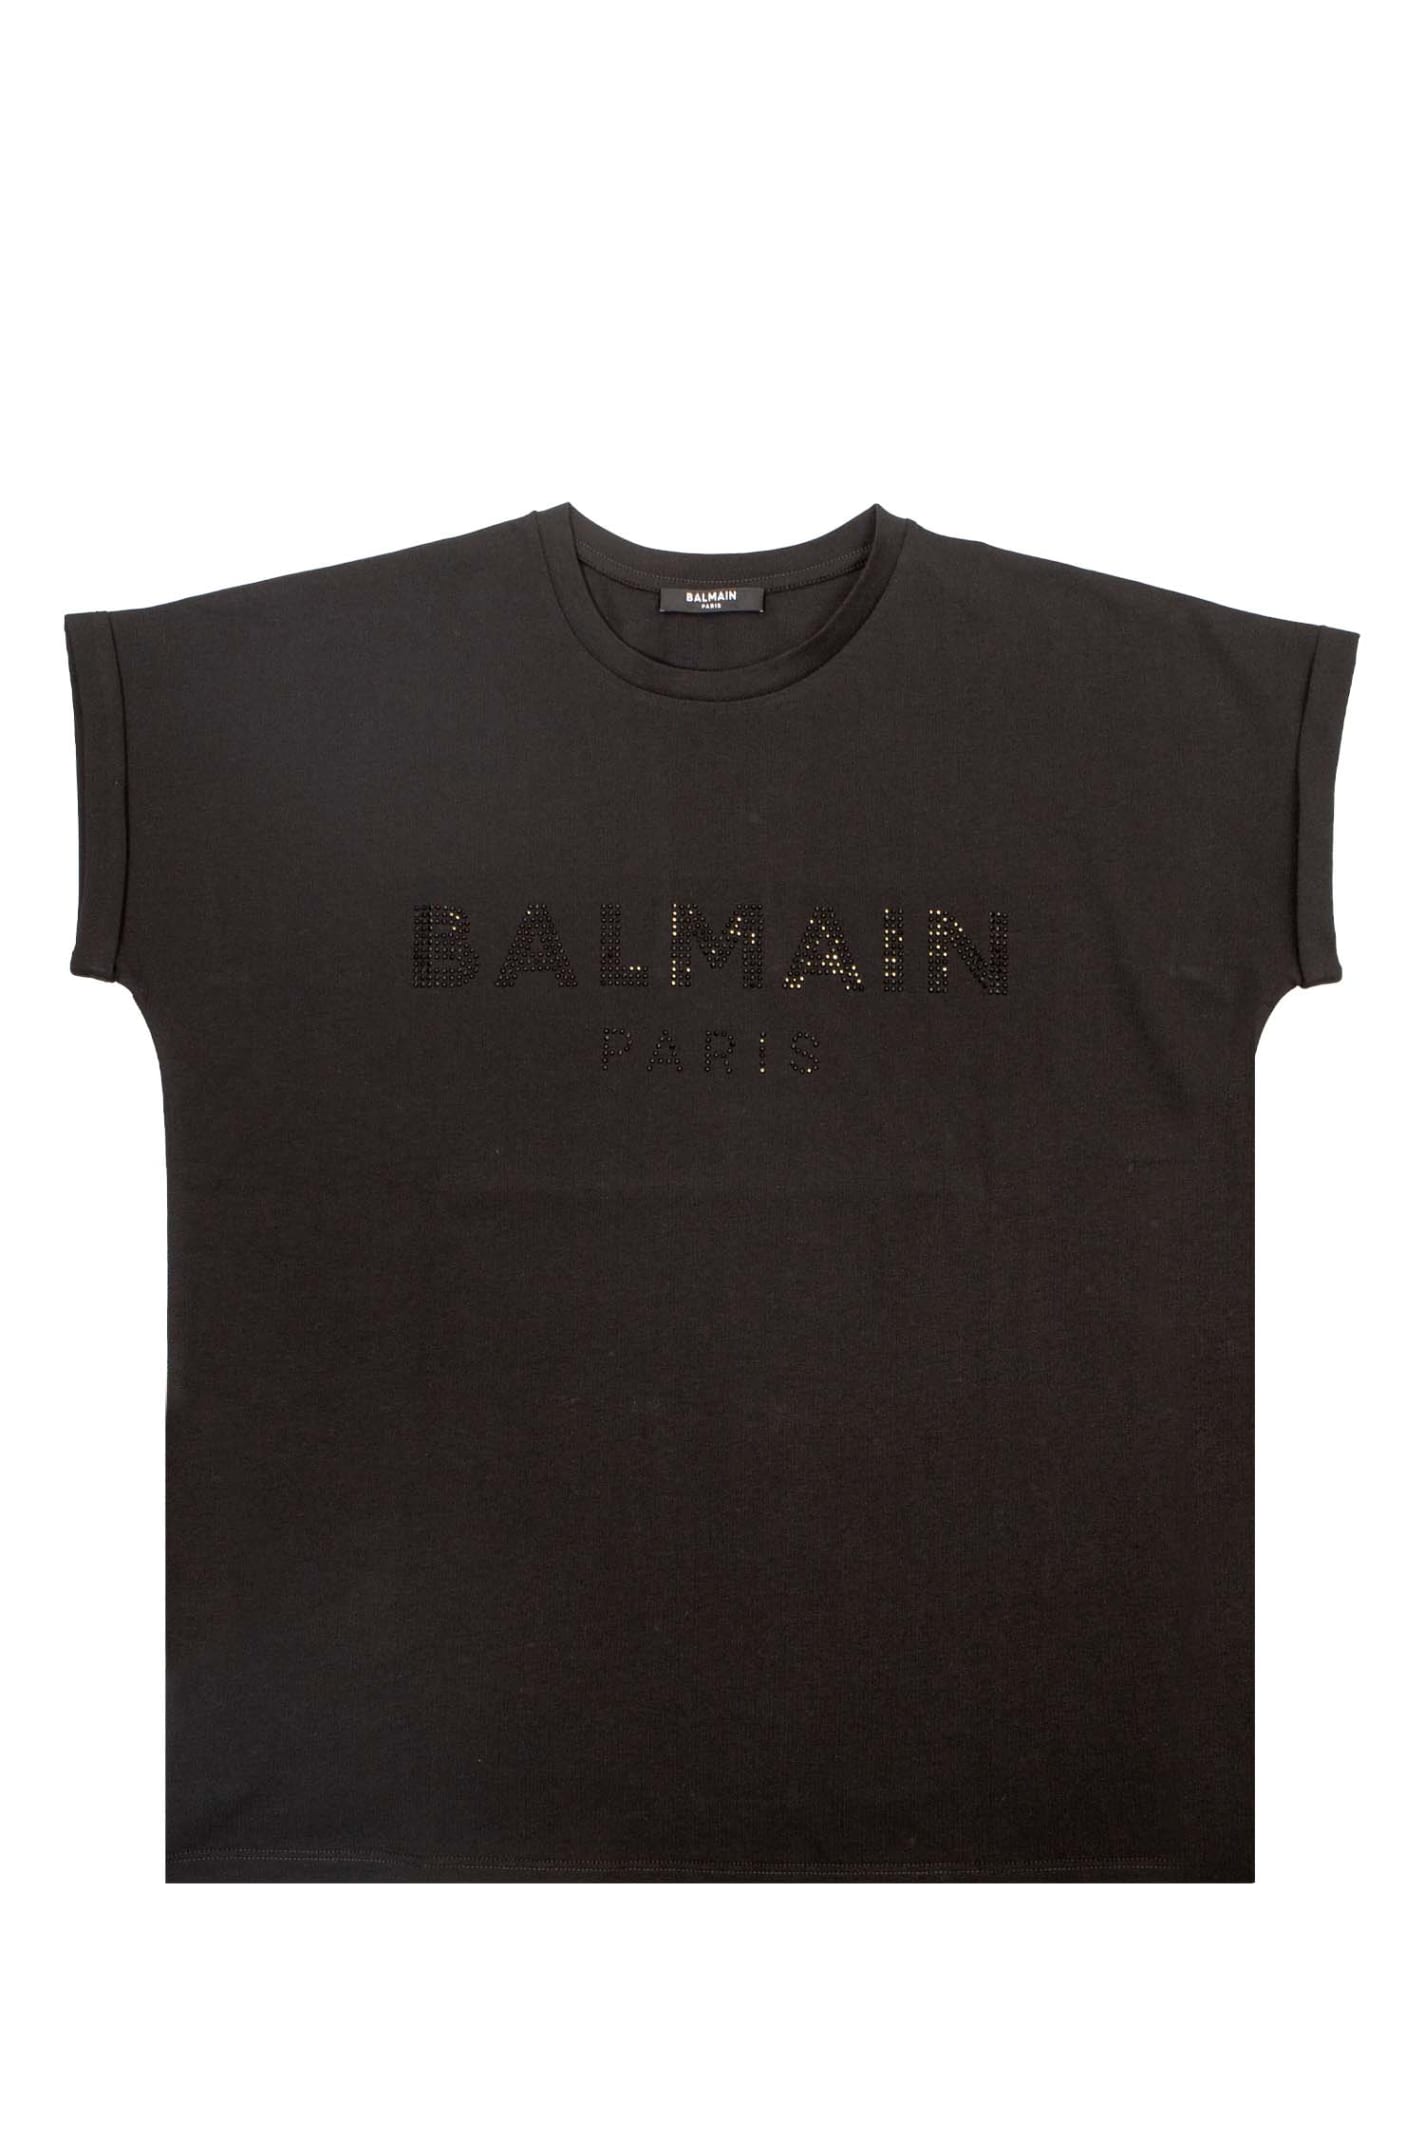 Balmain Cotton White T-shirt With Black Balmain Logo In Rhinestones